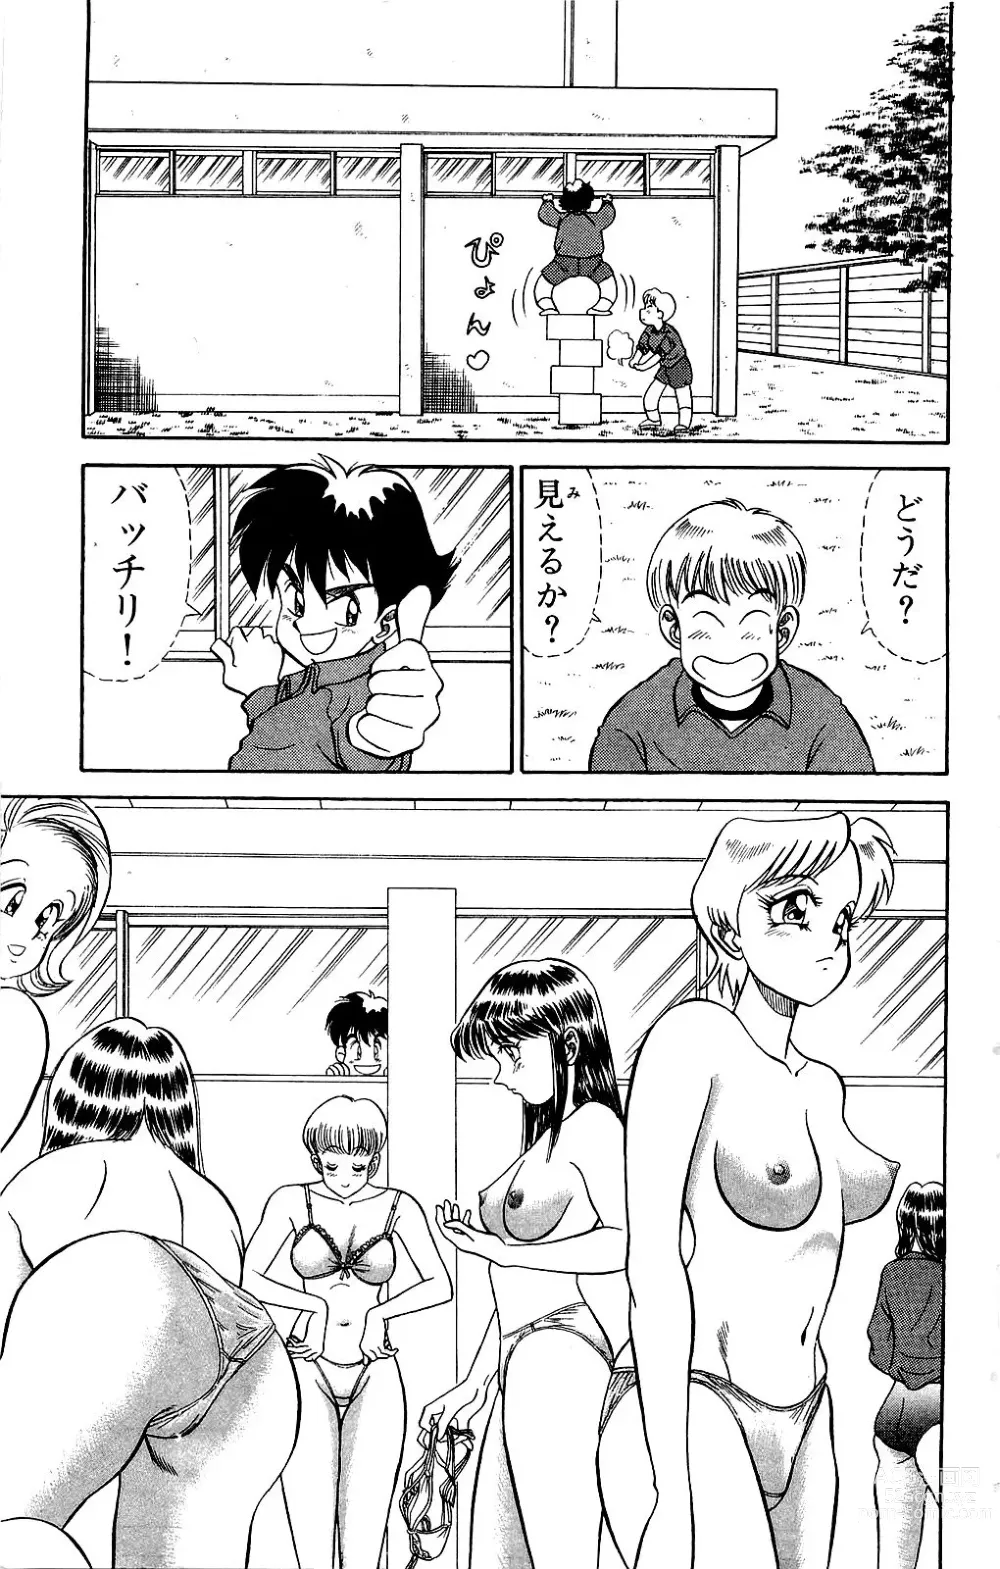 Page 5 of manga Orette Piyoritan Vol. 1